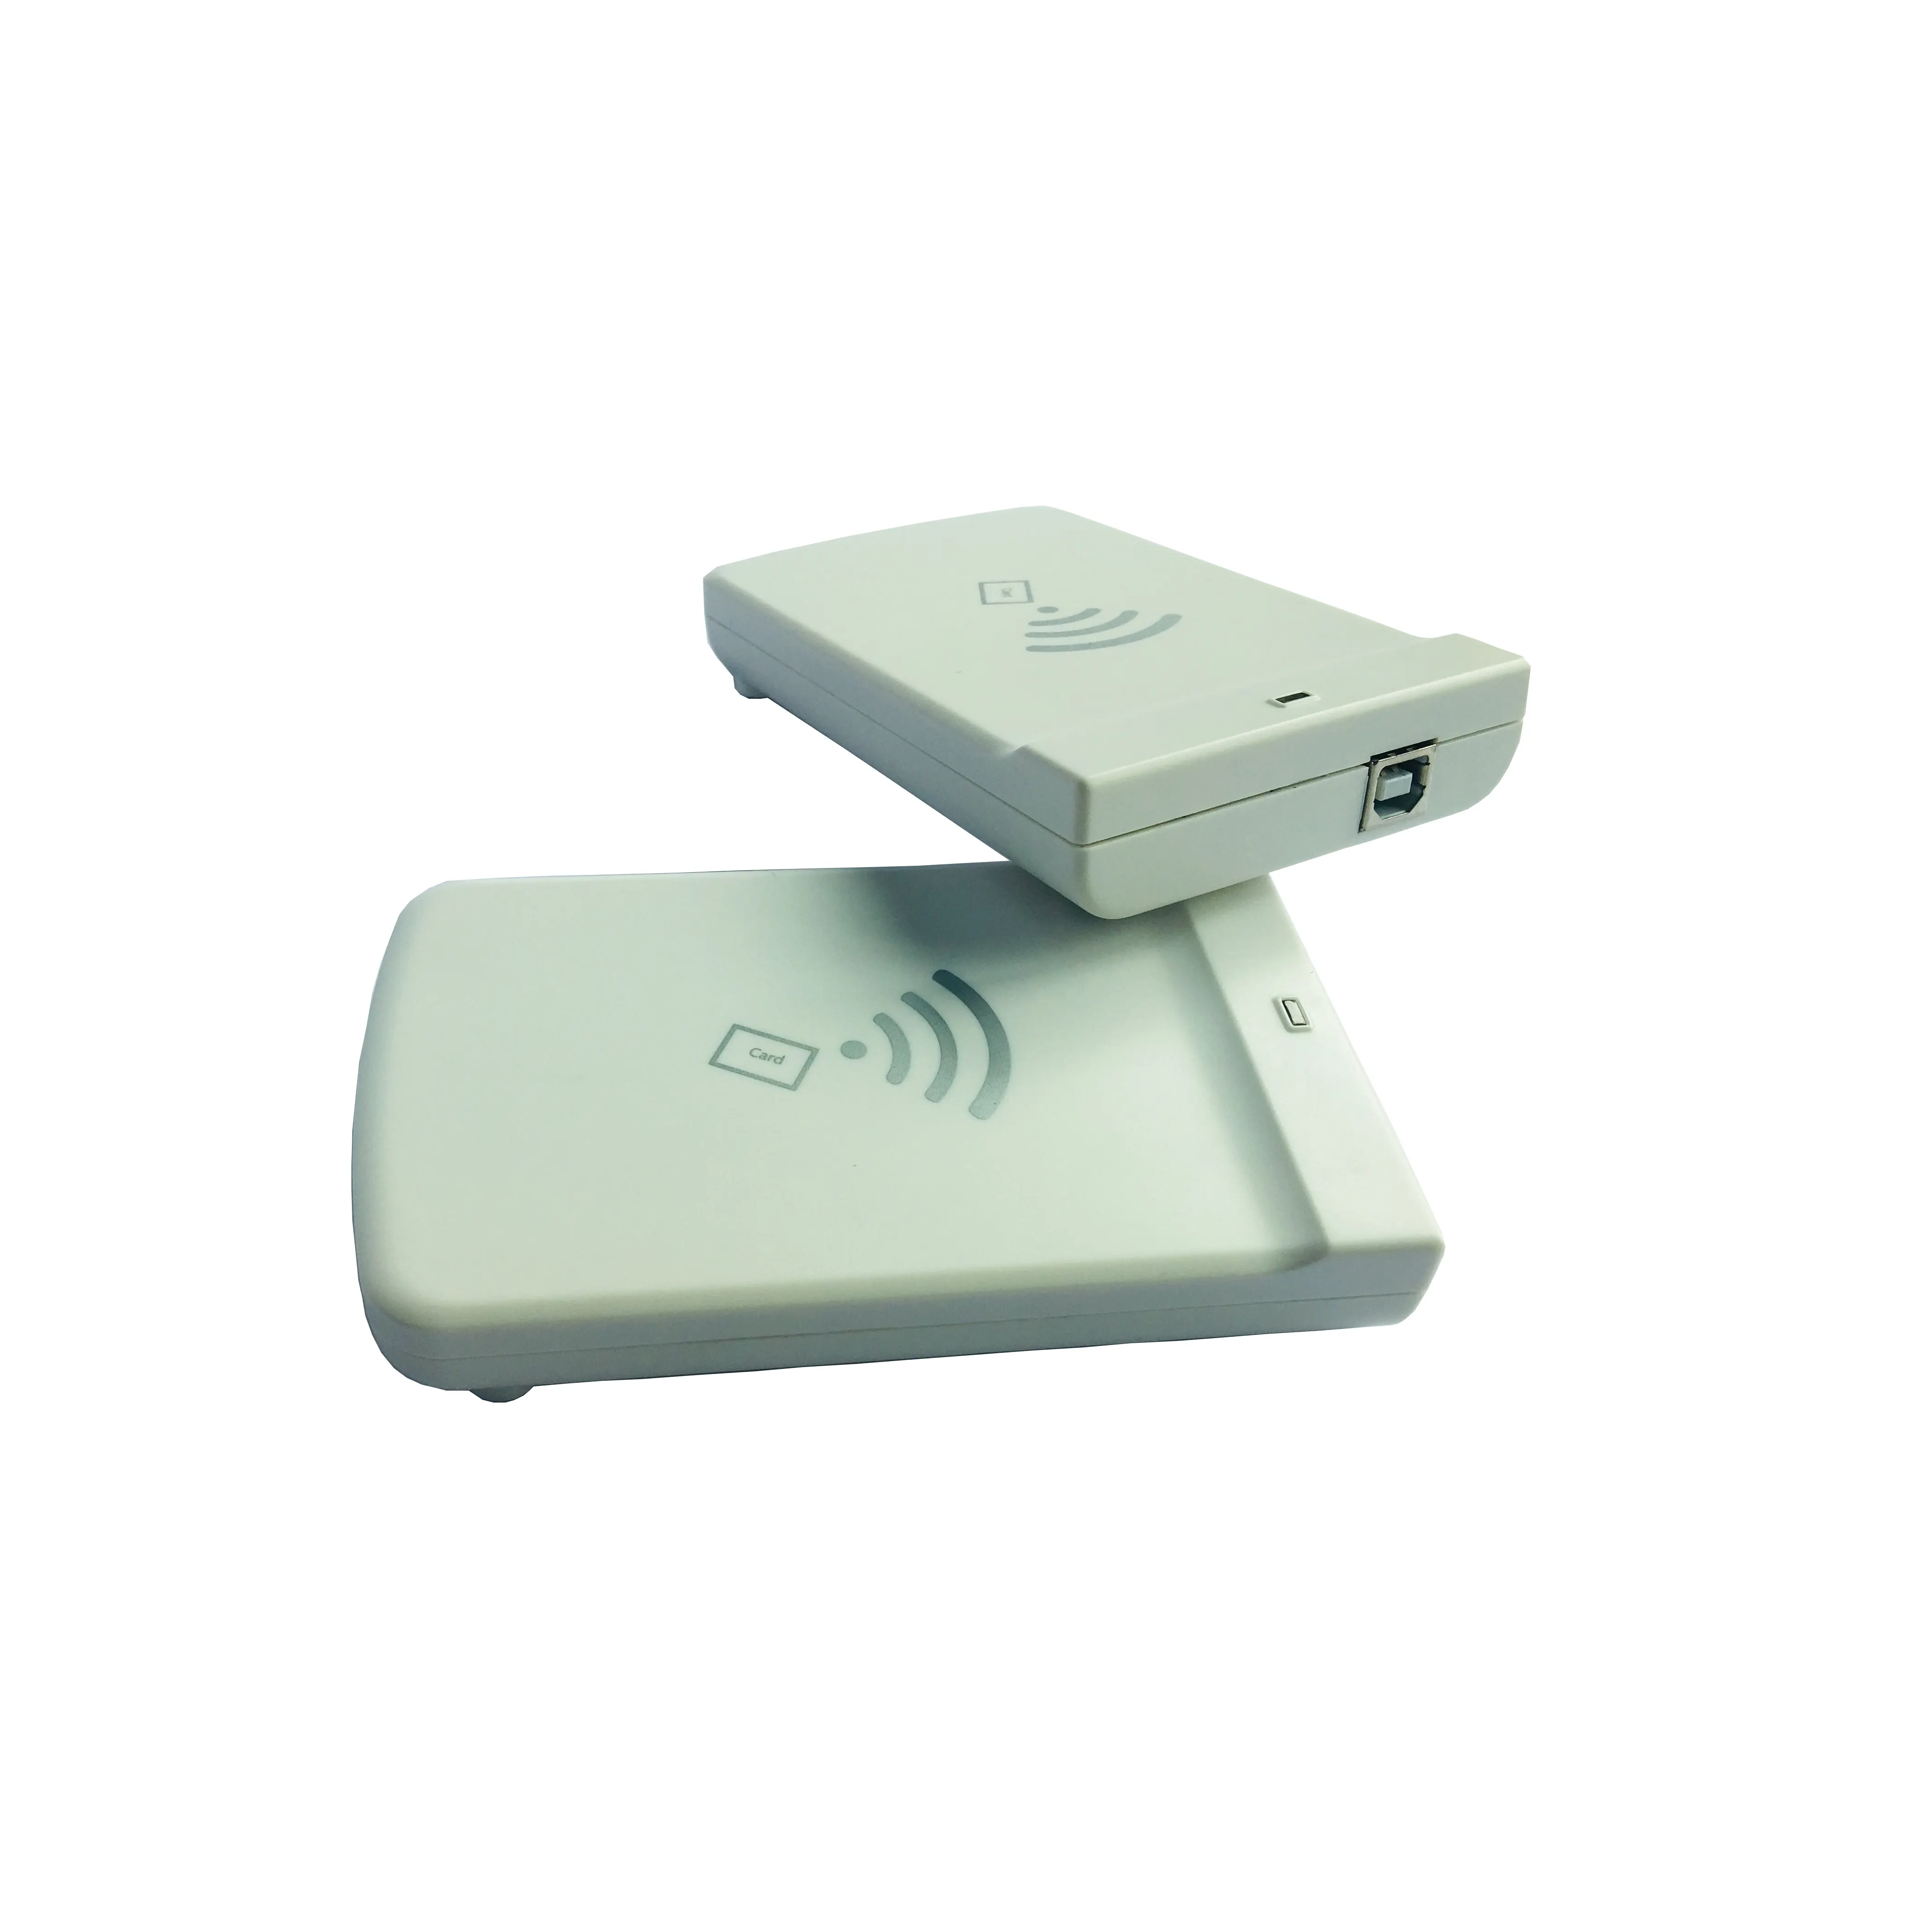 ISO18000-6C RFID antenna desktop usb reader RS232 interface PR9200 write range EPC Gen2 writer software reader for UHF RFID car